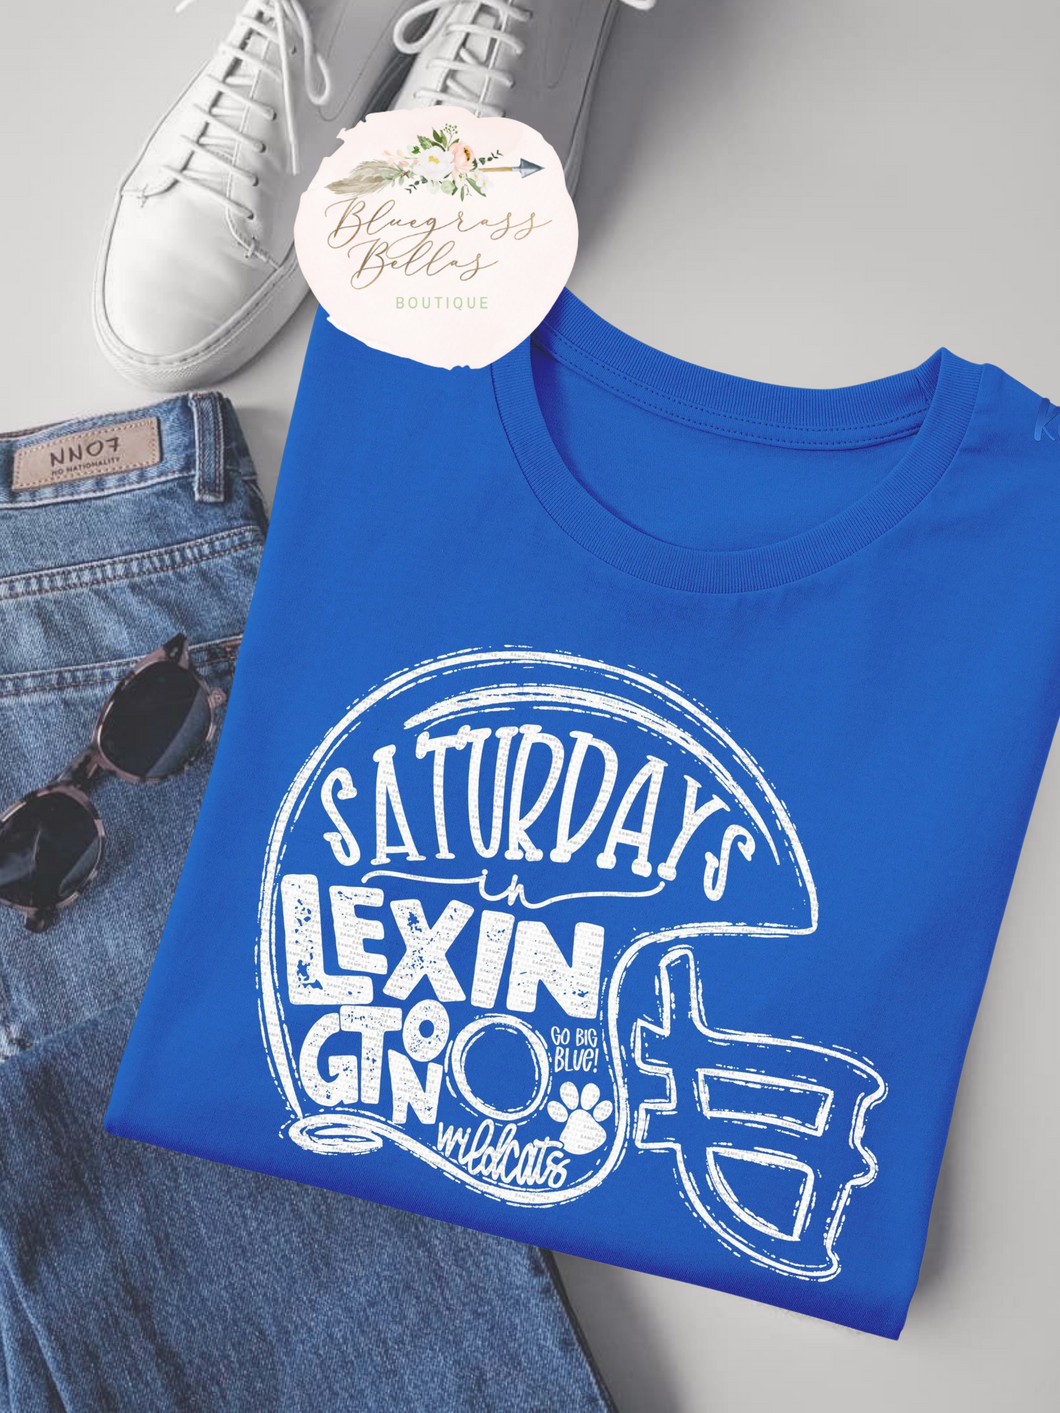 Saturdays in Lexington T-Shirt